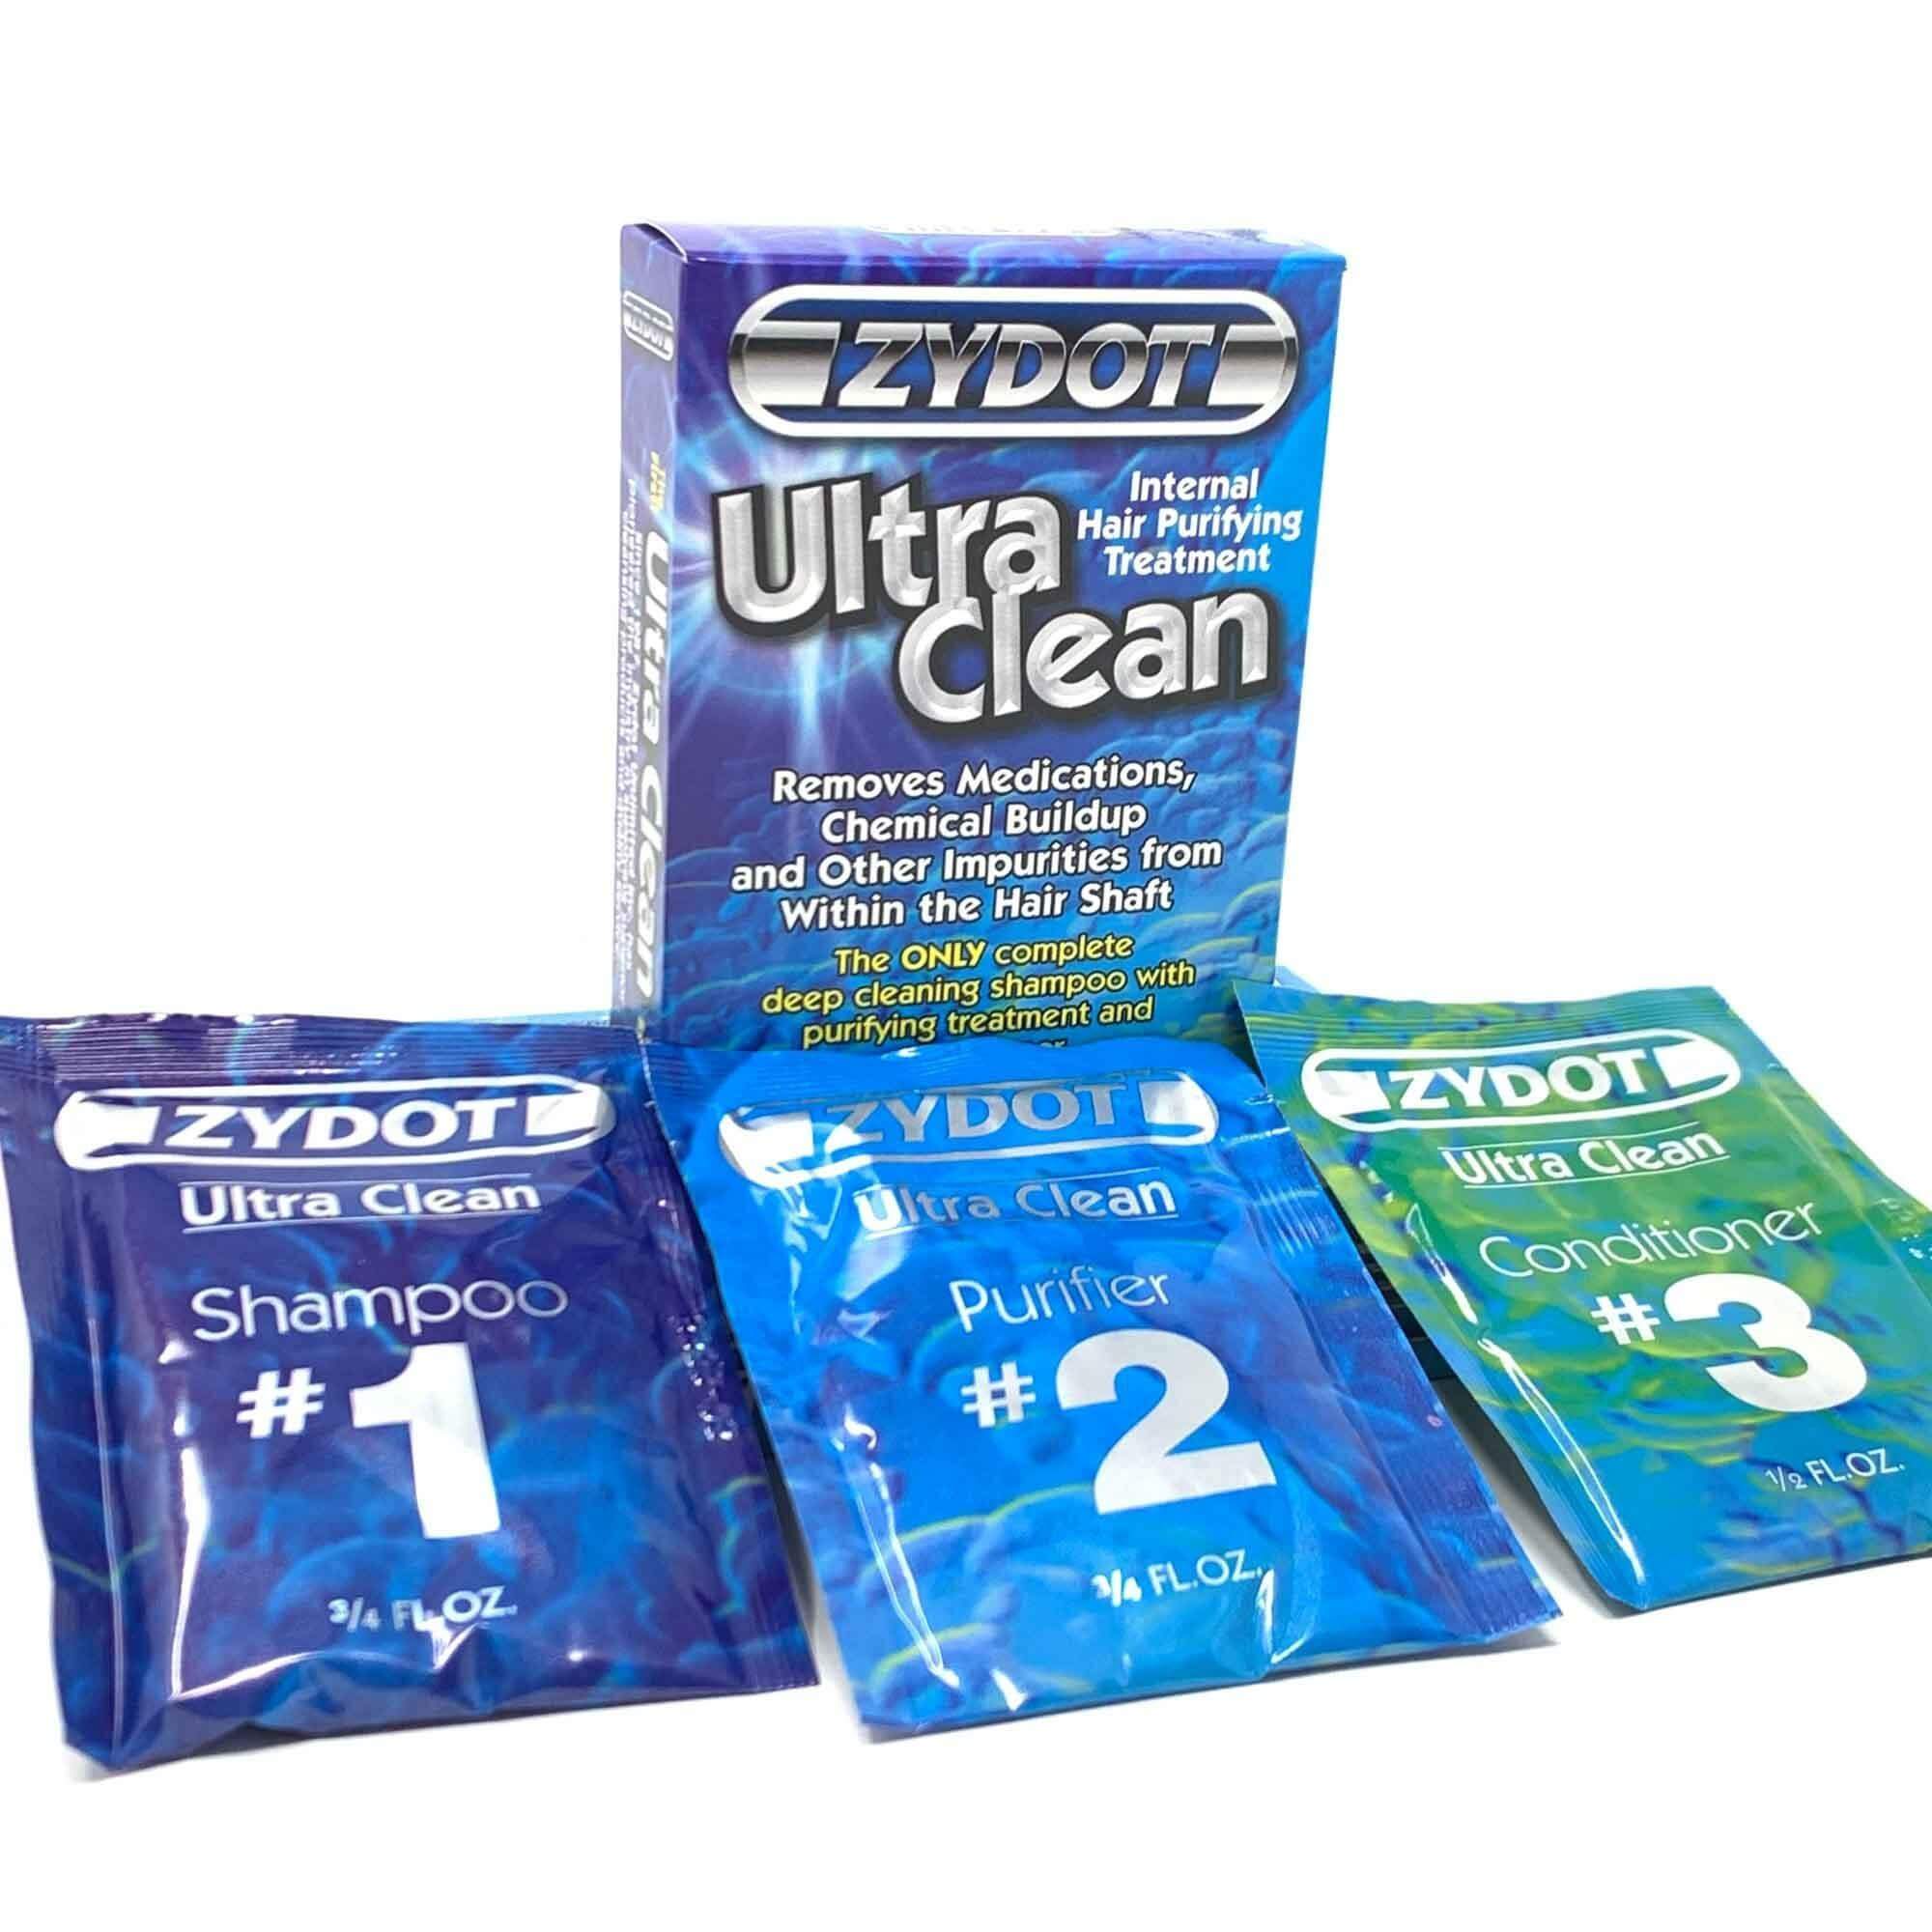 zydot Ultra Clean Shampoo